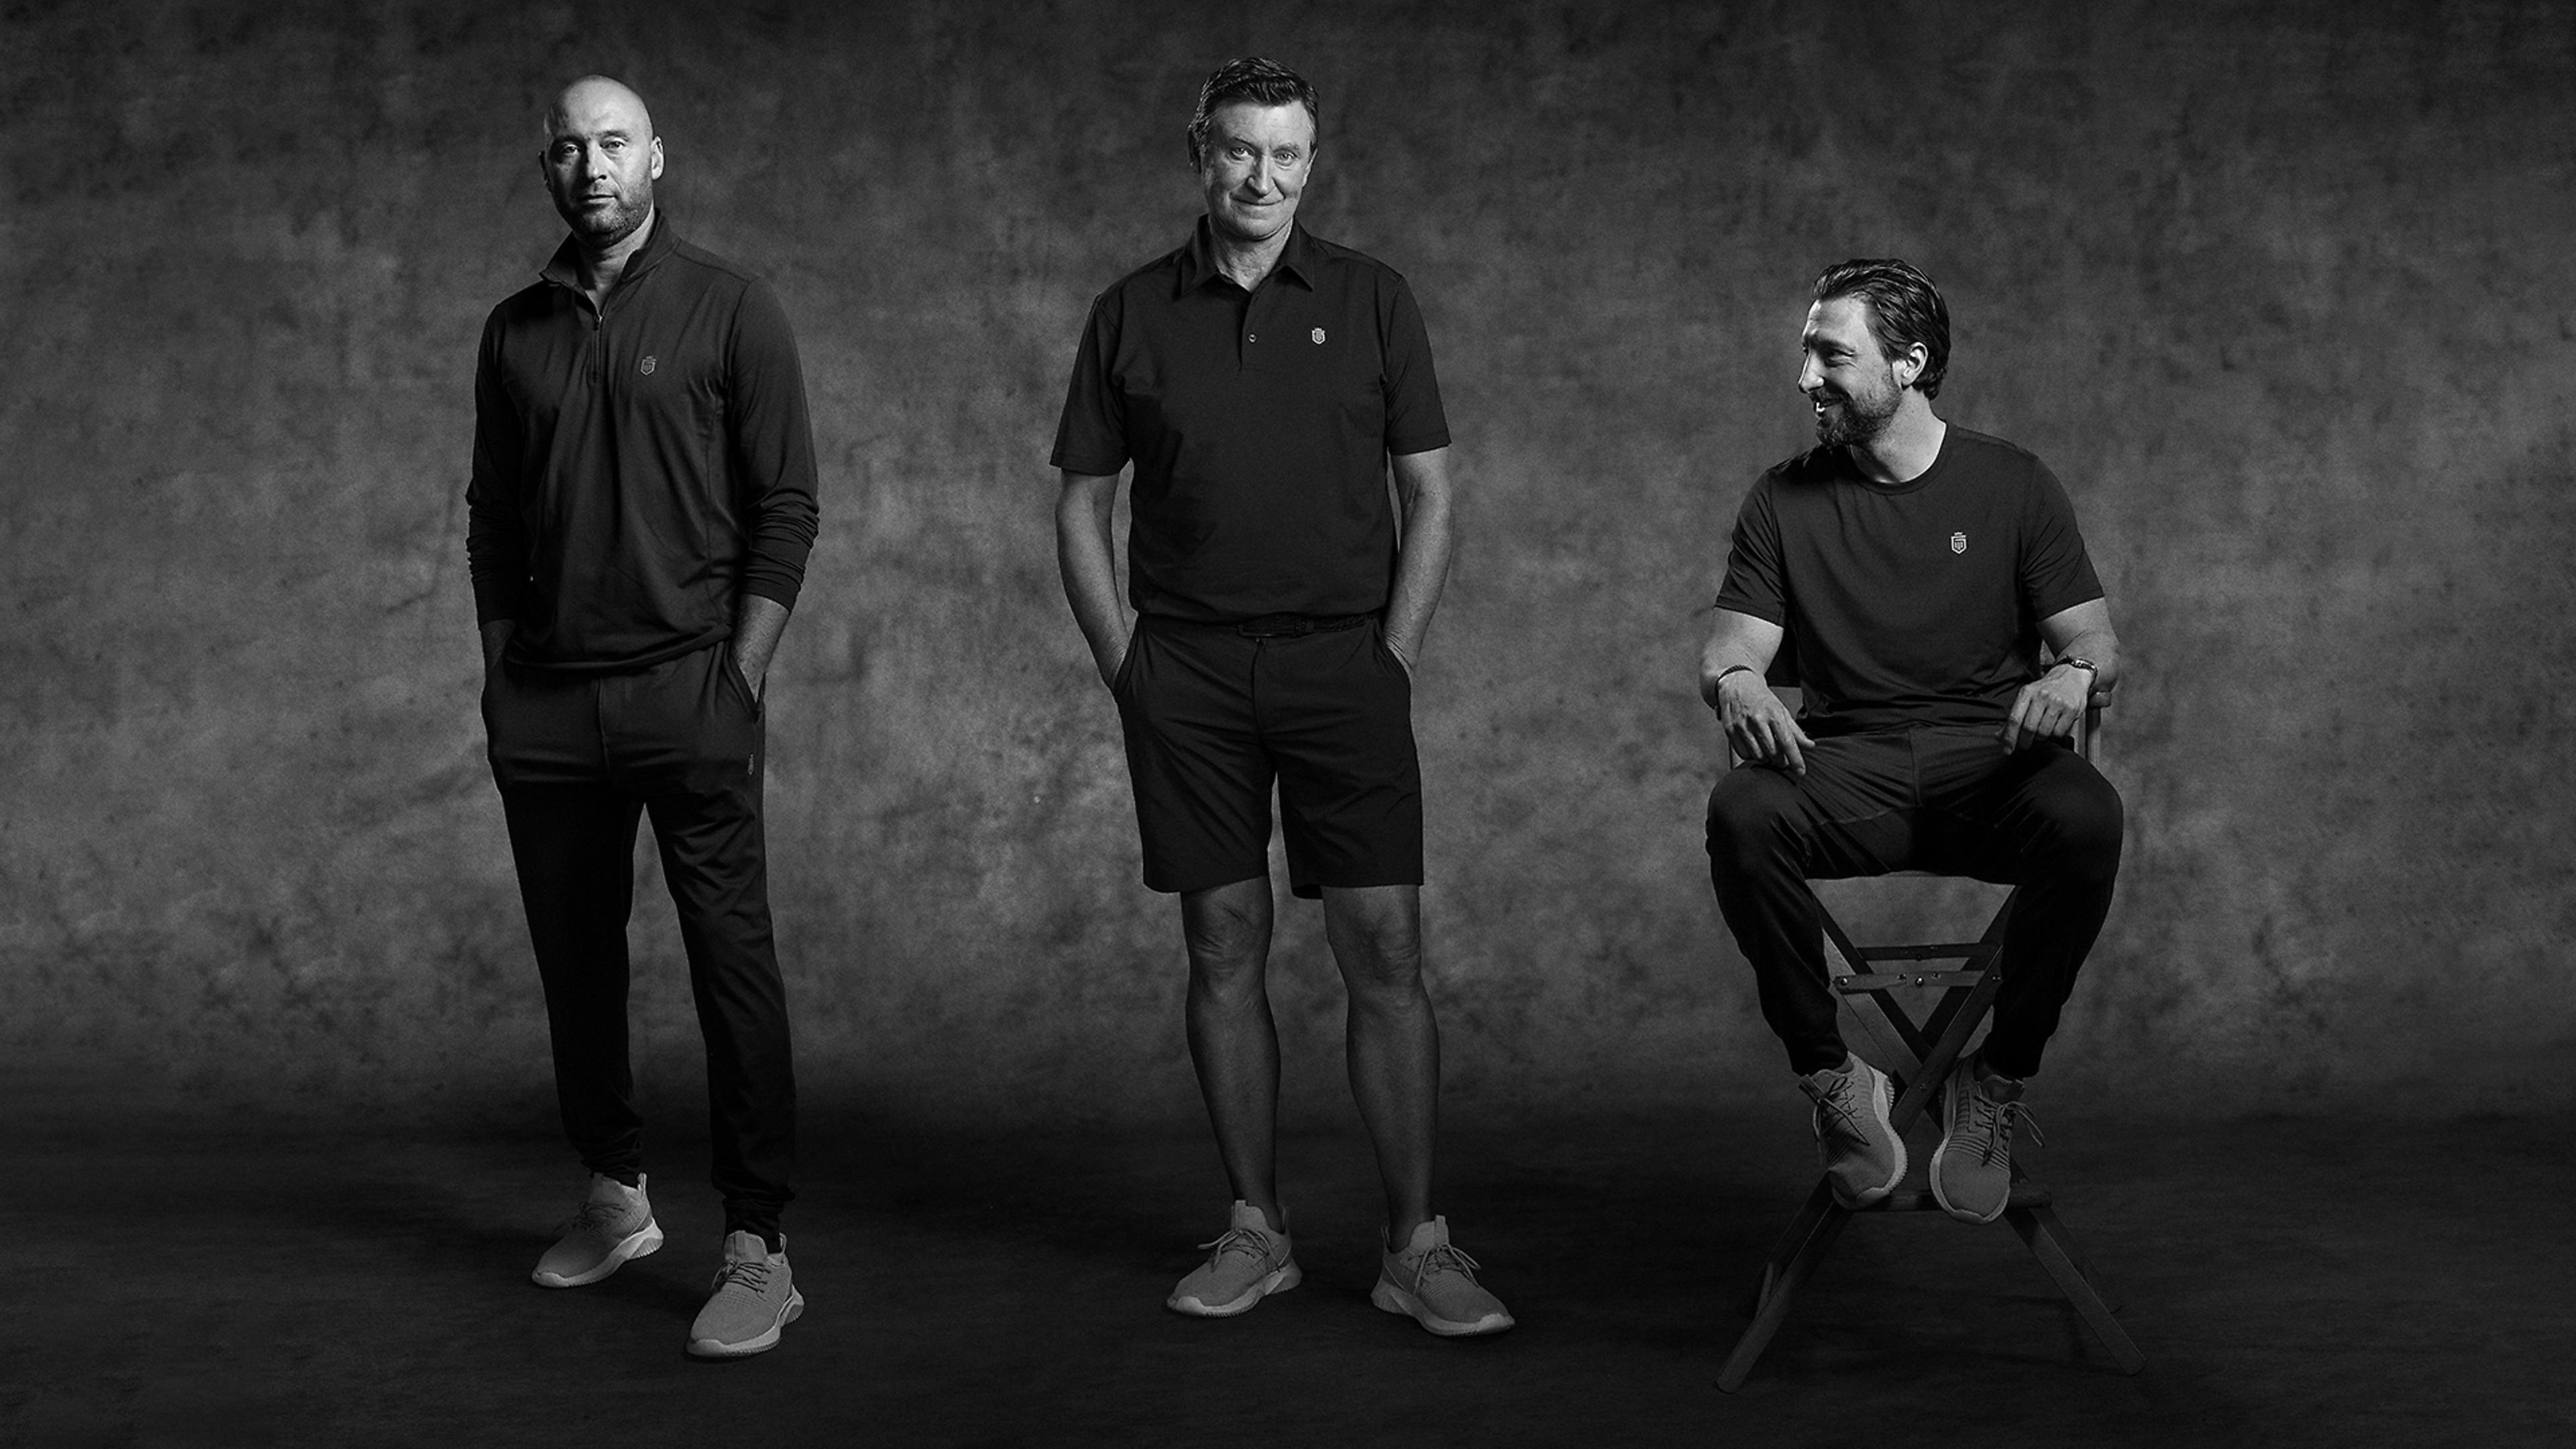 Derek Jeter, Wayne Gretzky, and Misty Copeland started a sportswear brand